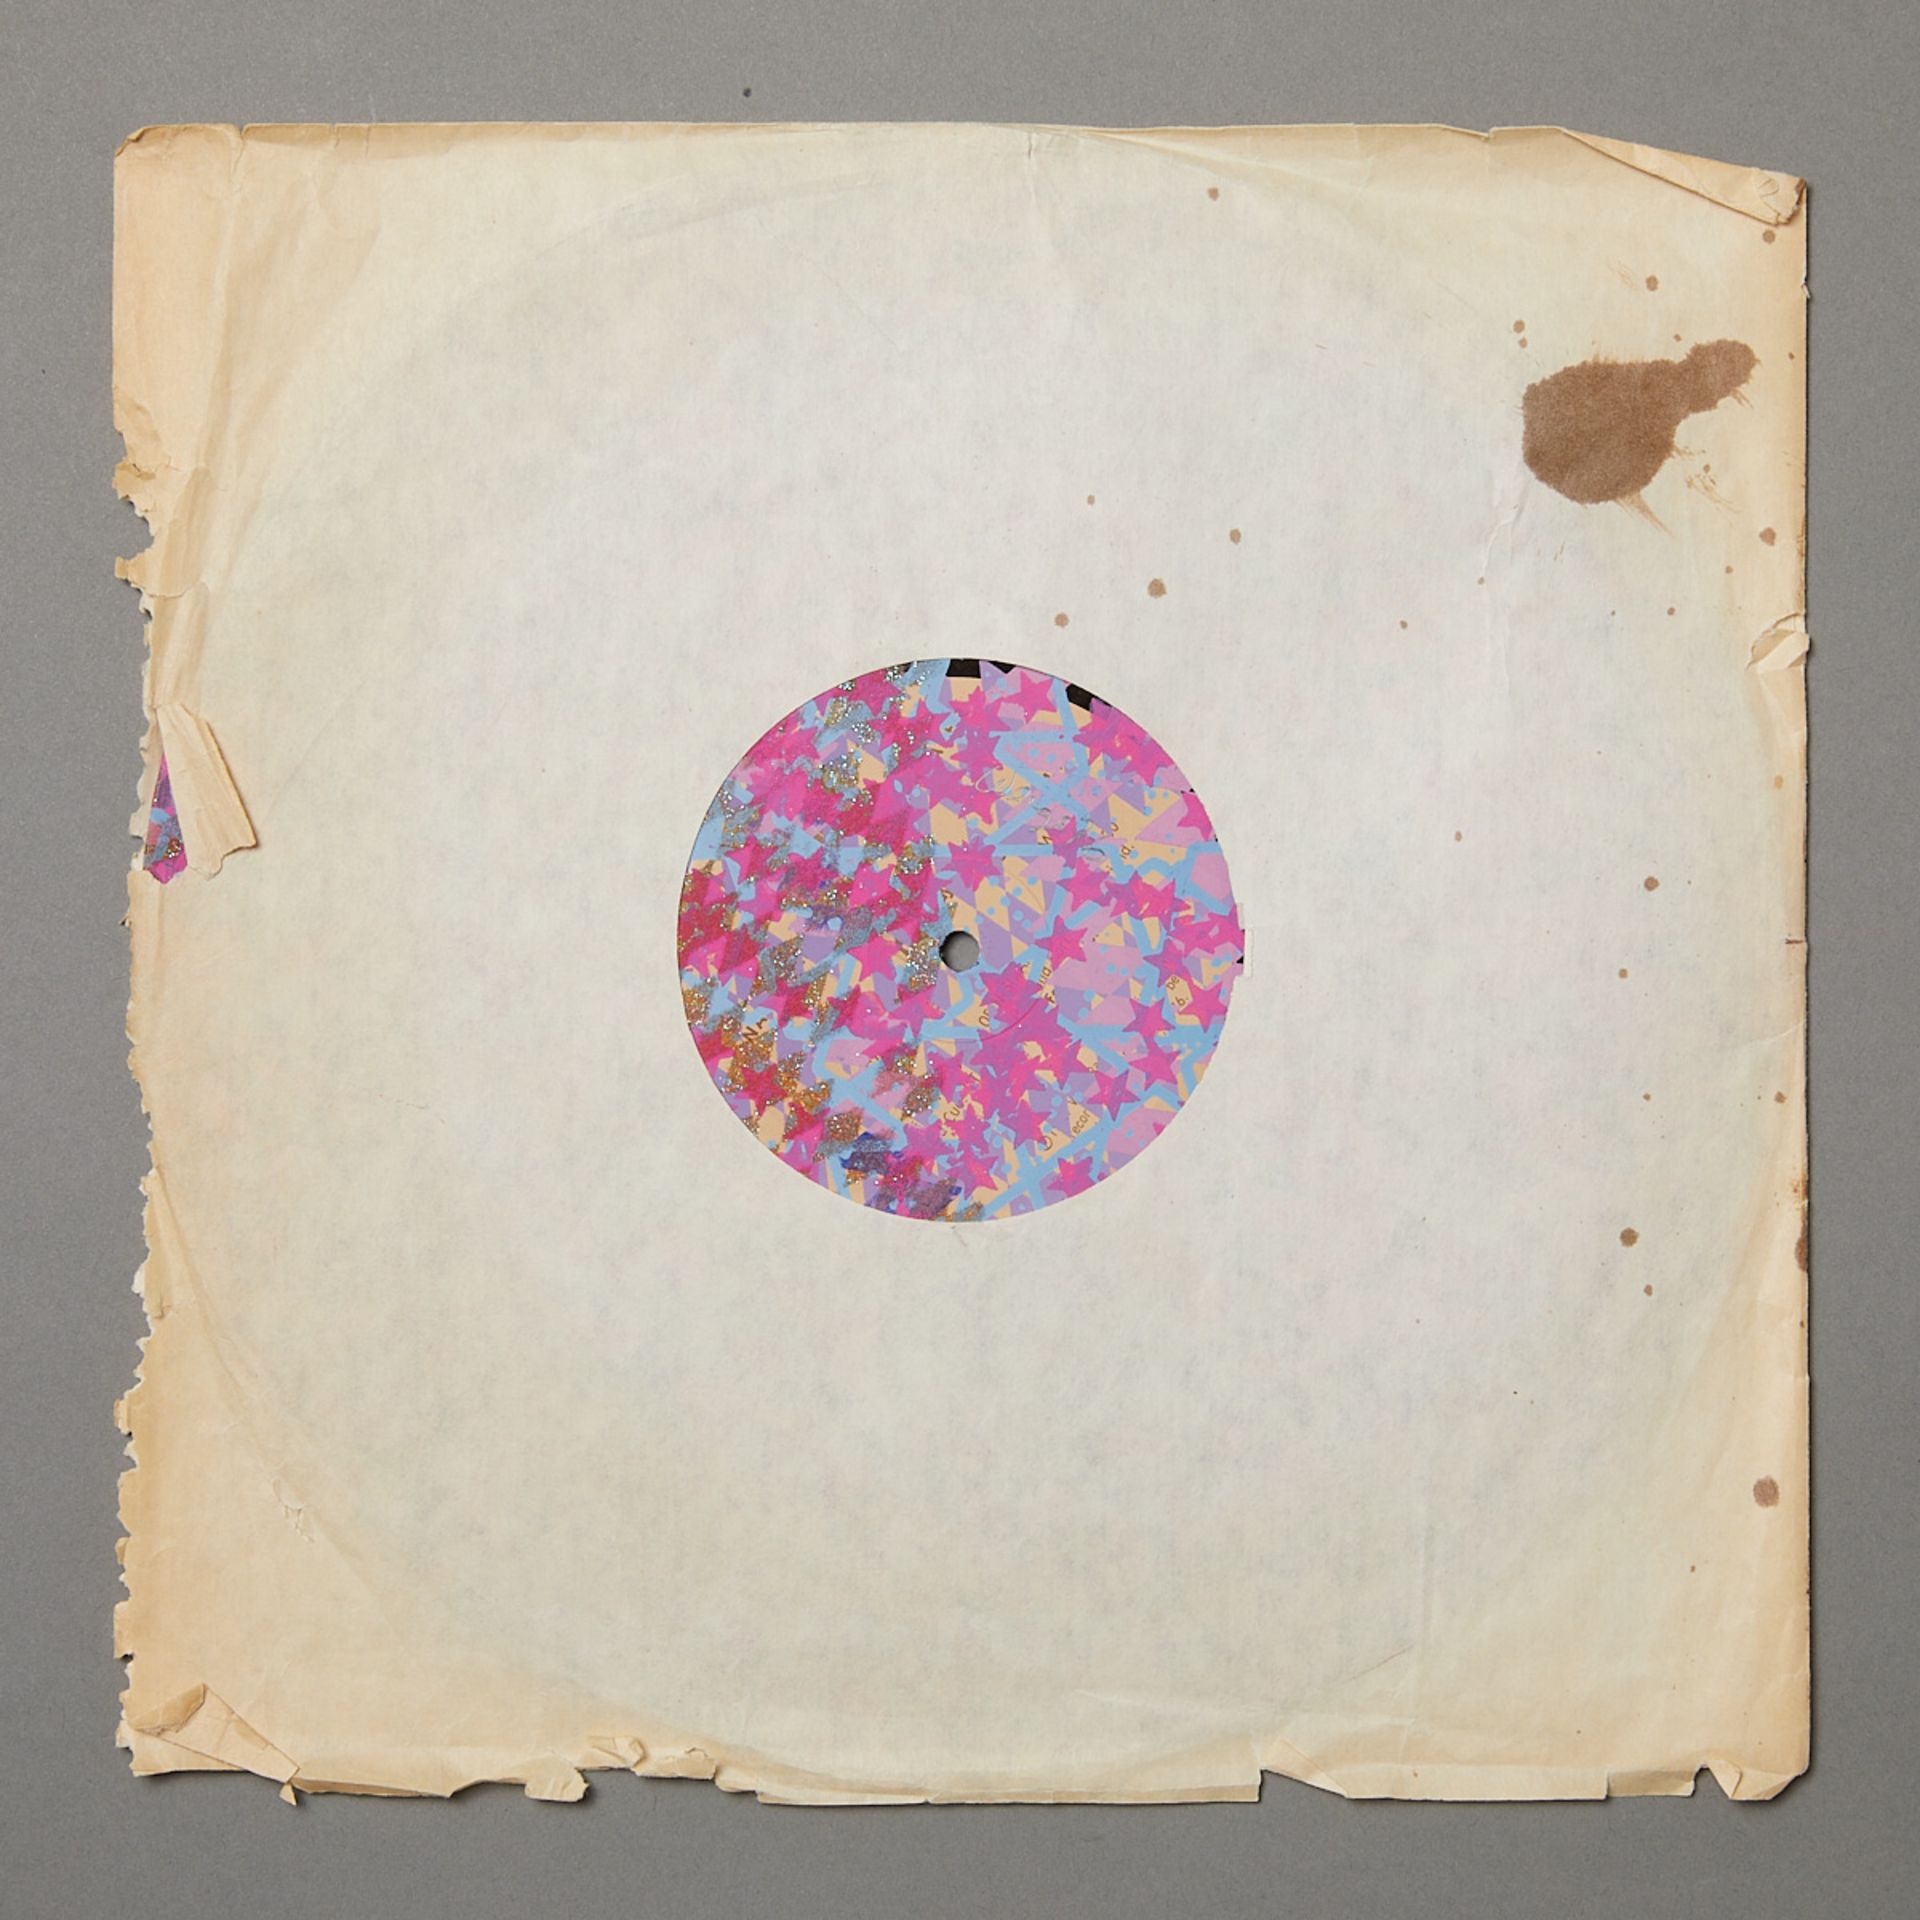 William Weege Mixed Media on Vinyl Record 1976 - Image 3 of 8